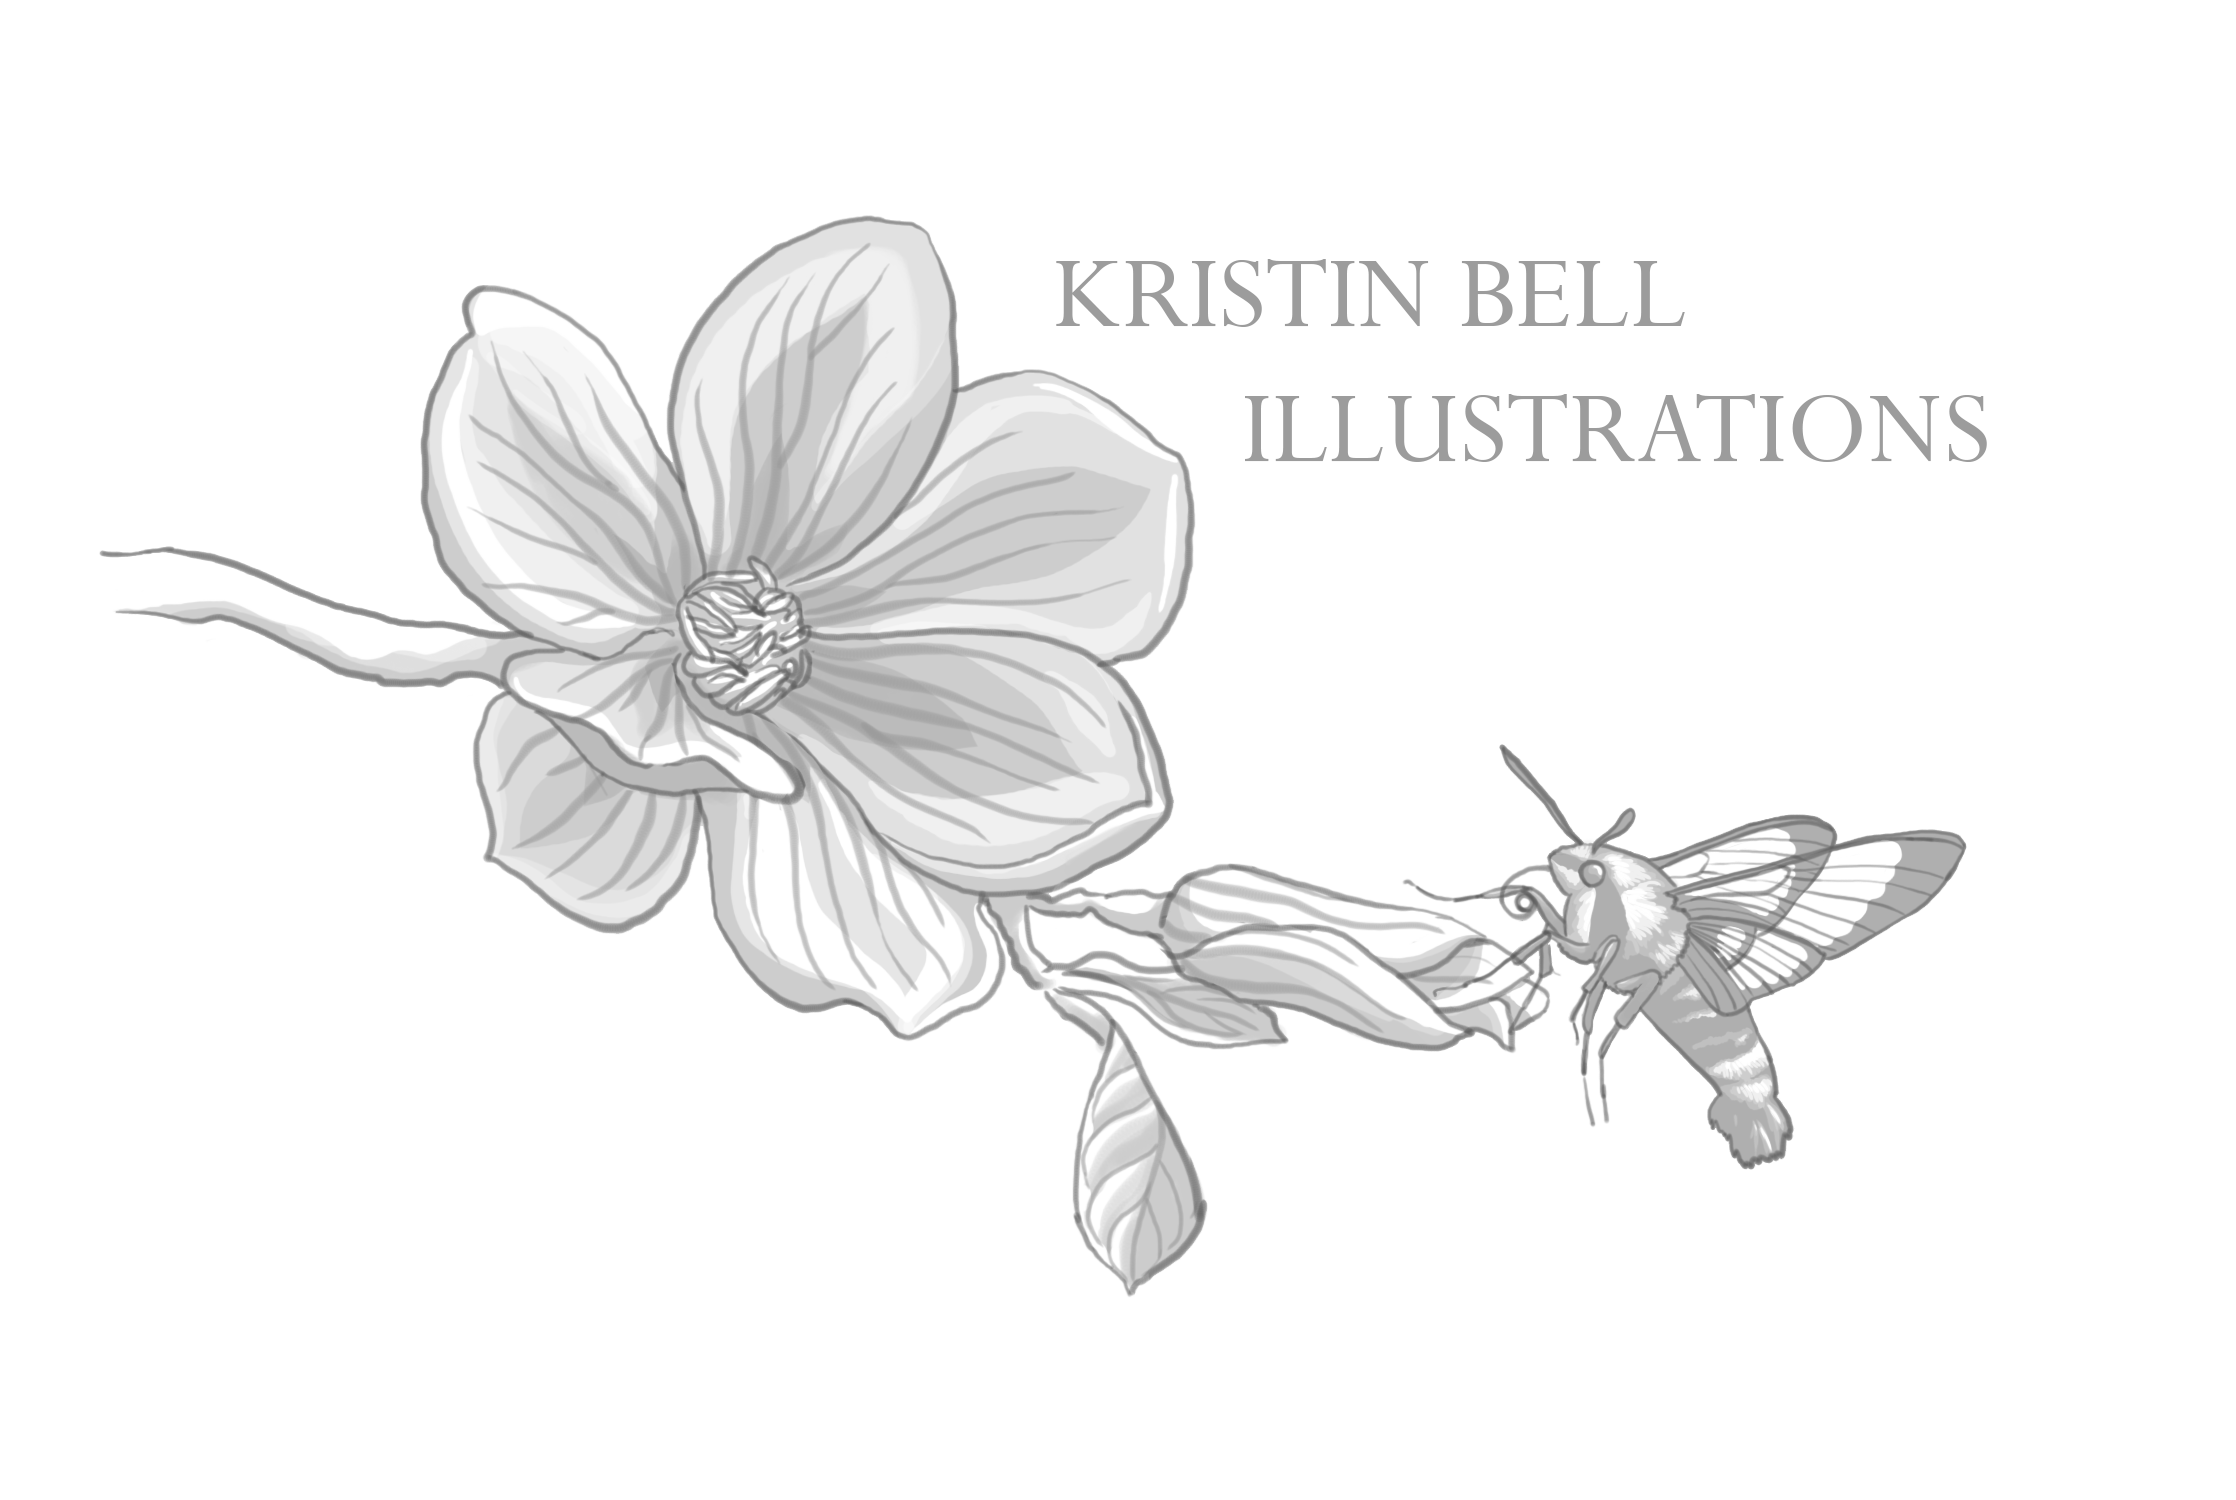 Kristin Bell